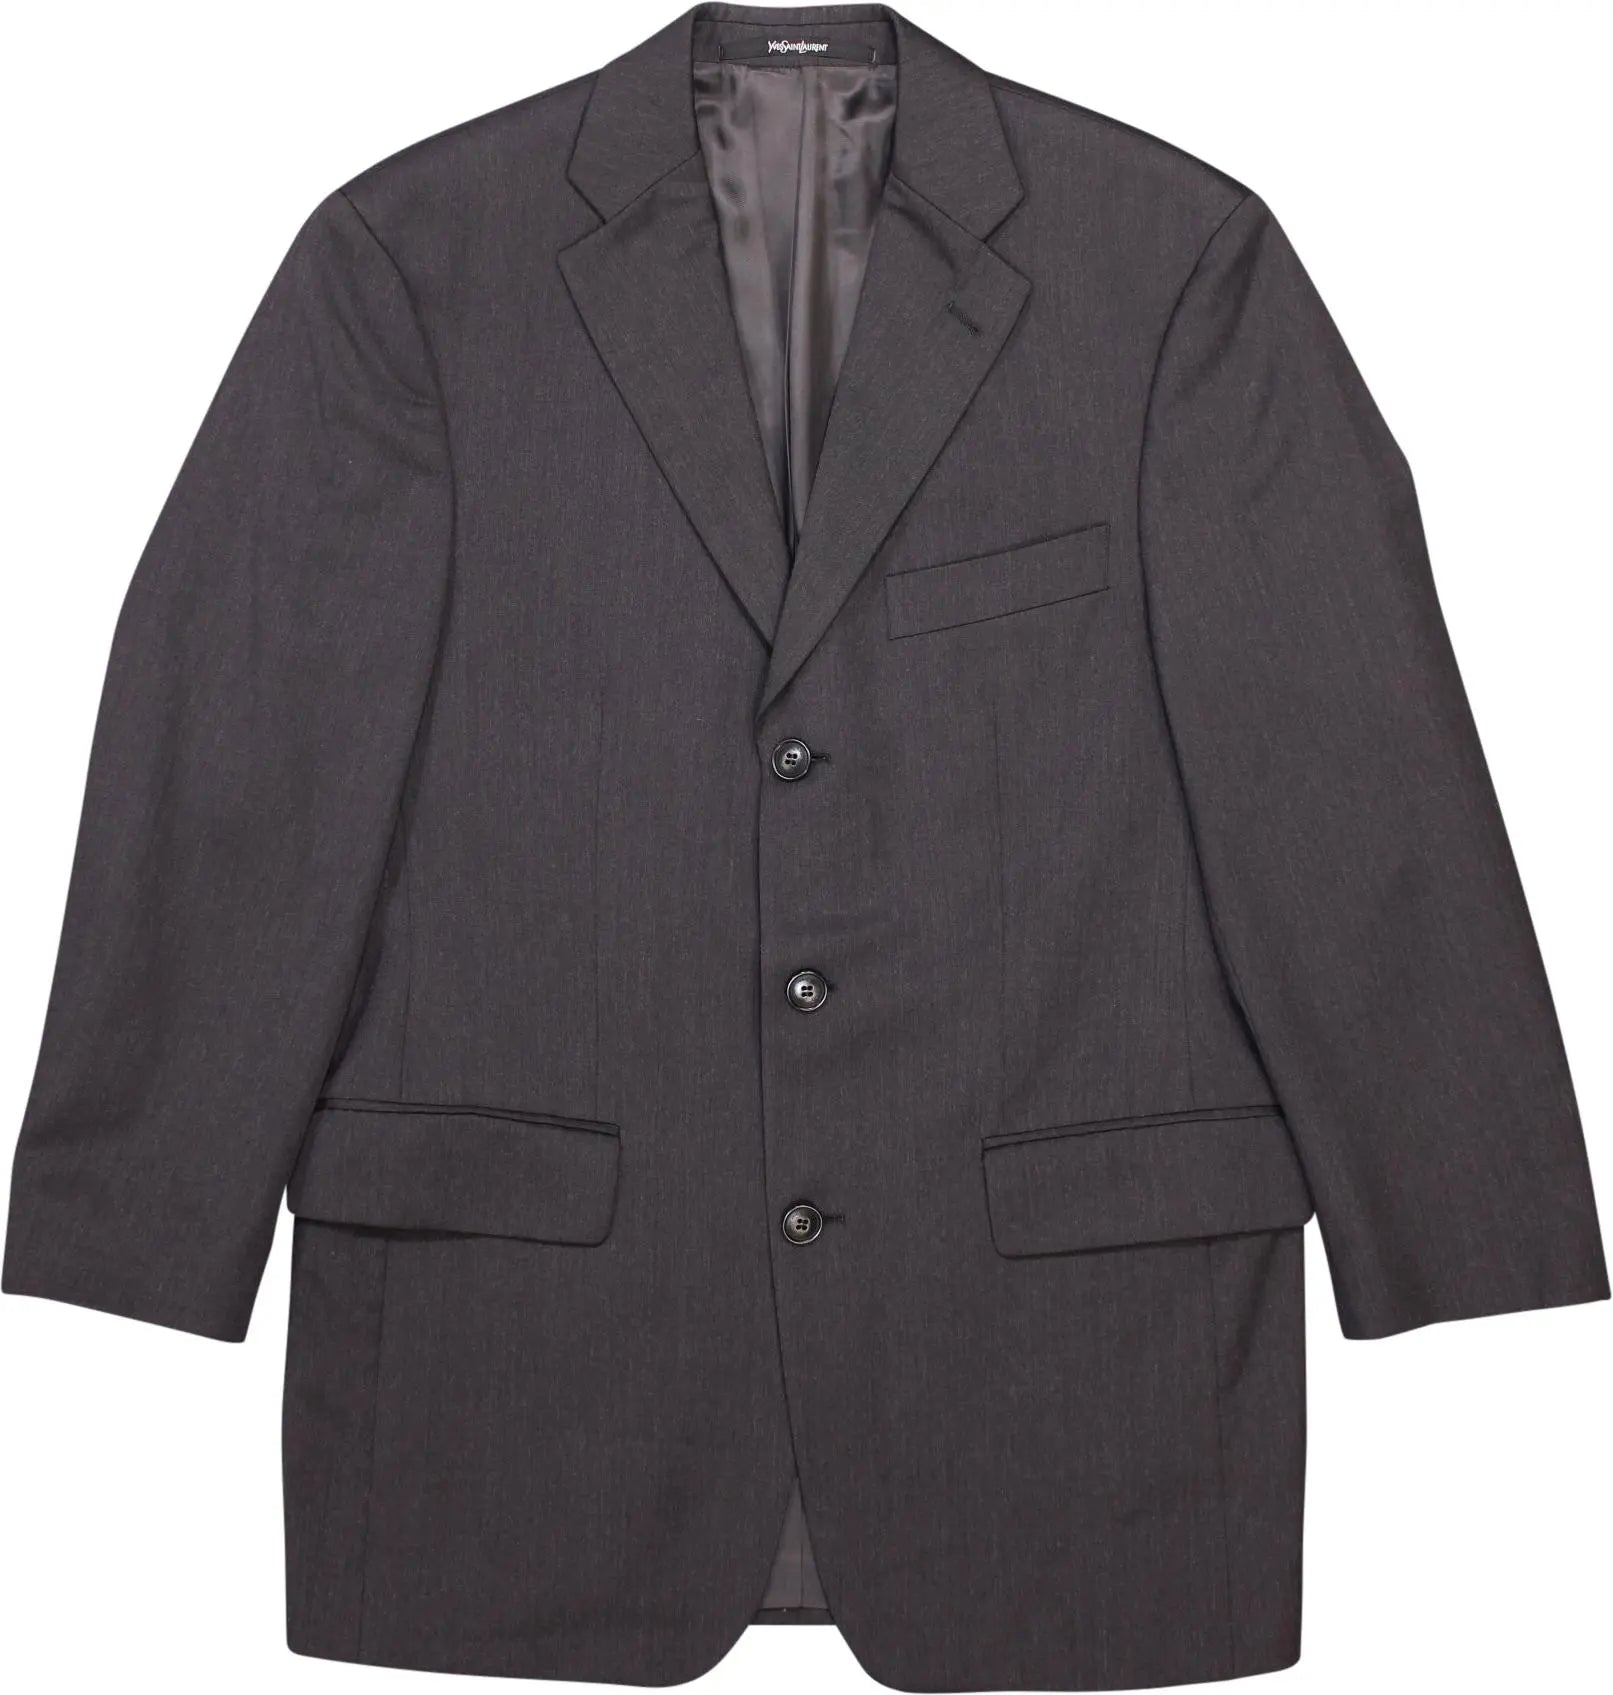 Yves Saint Laurent - Grey Yves Saint Laurent Suit- ThriftTale.com - Vintage and second handclothing